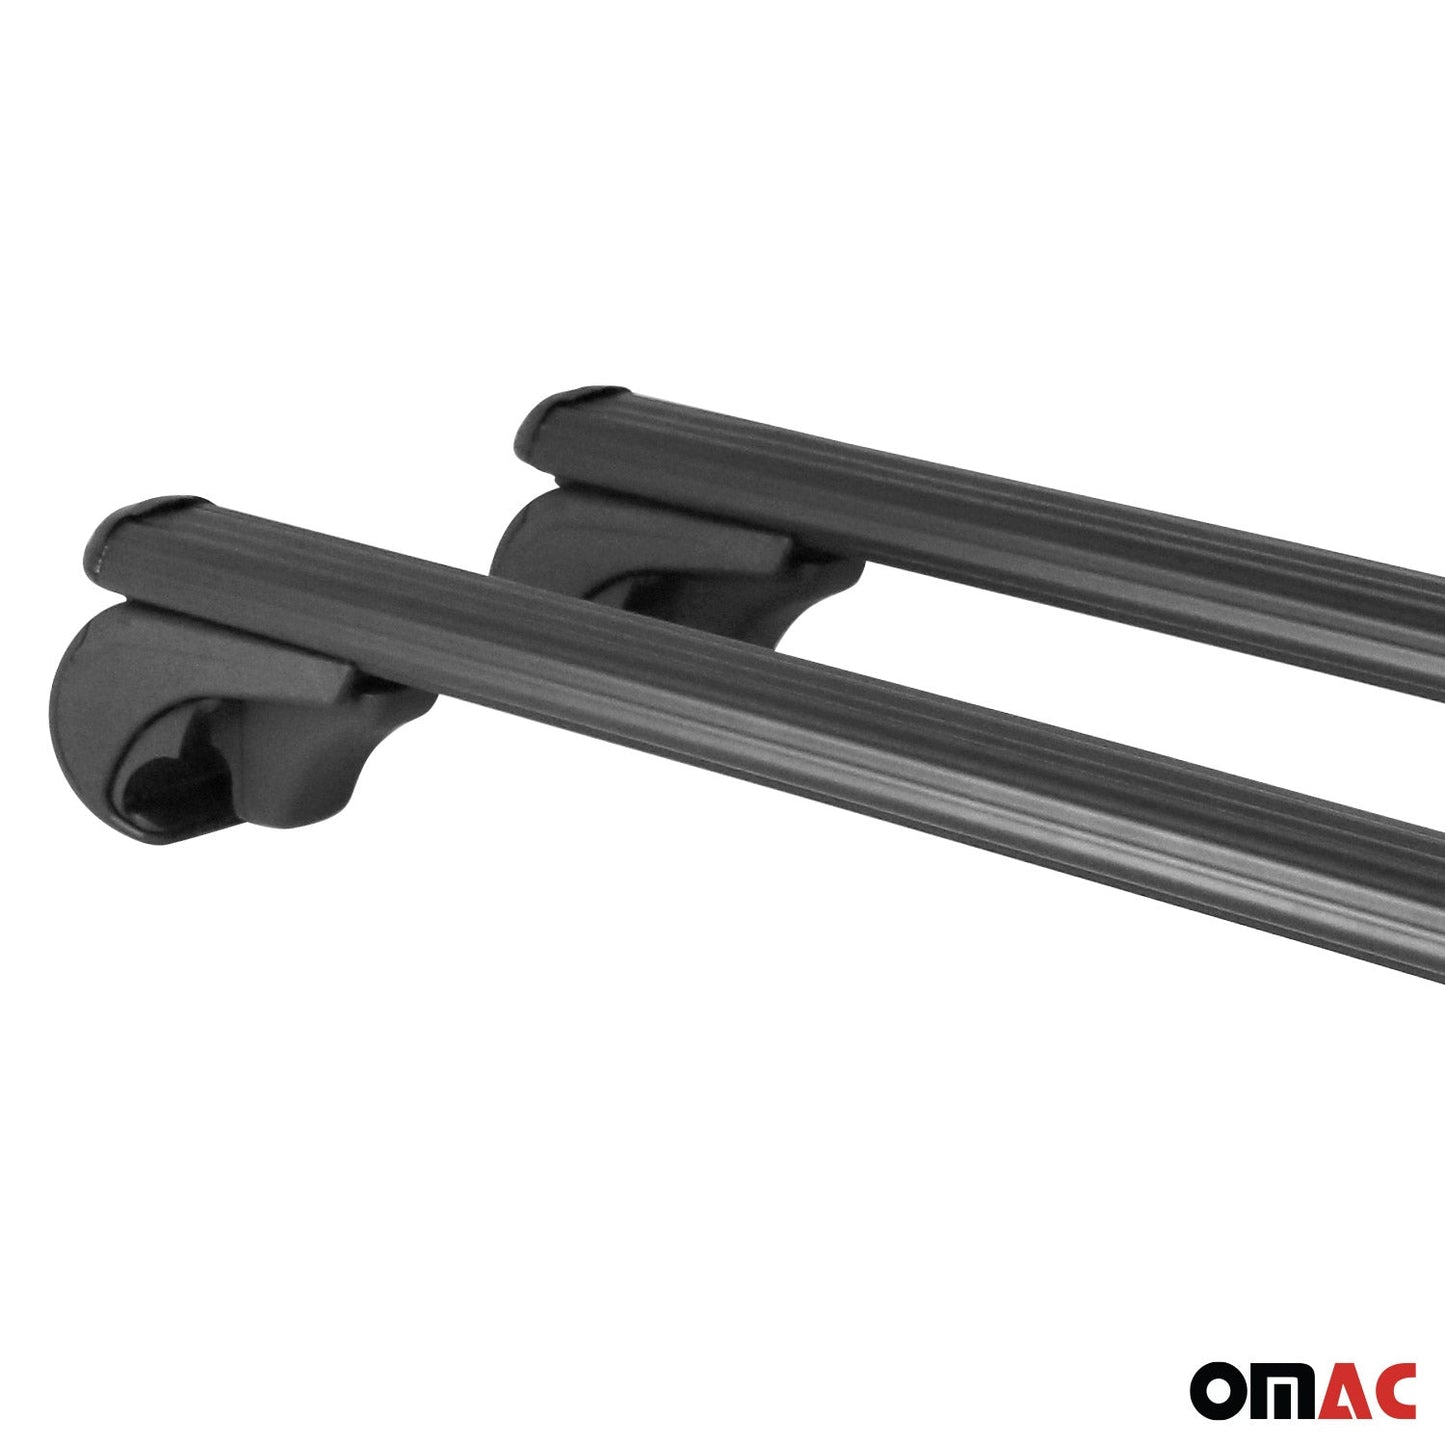 OMAC Lockable Roof Rack Cross Bars Carrier for Hyundai Santa Fe 2001-2006 Black 32059696929MB